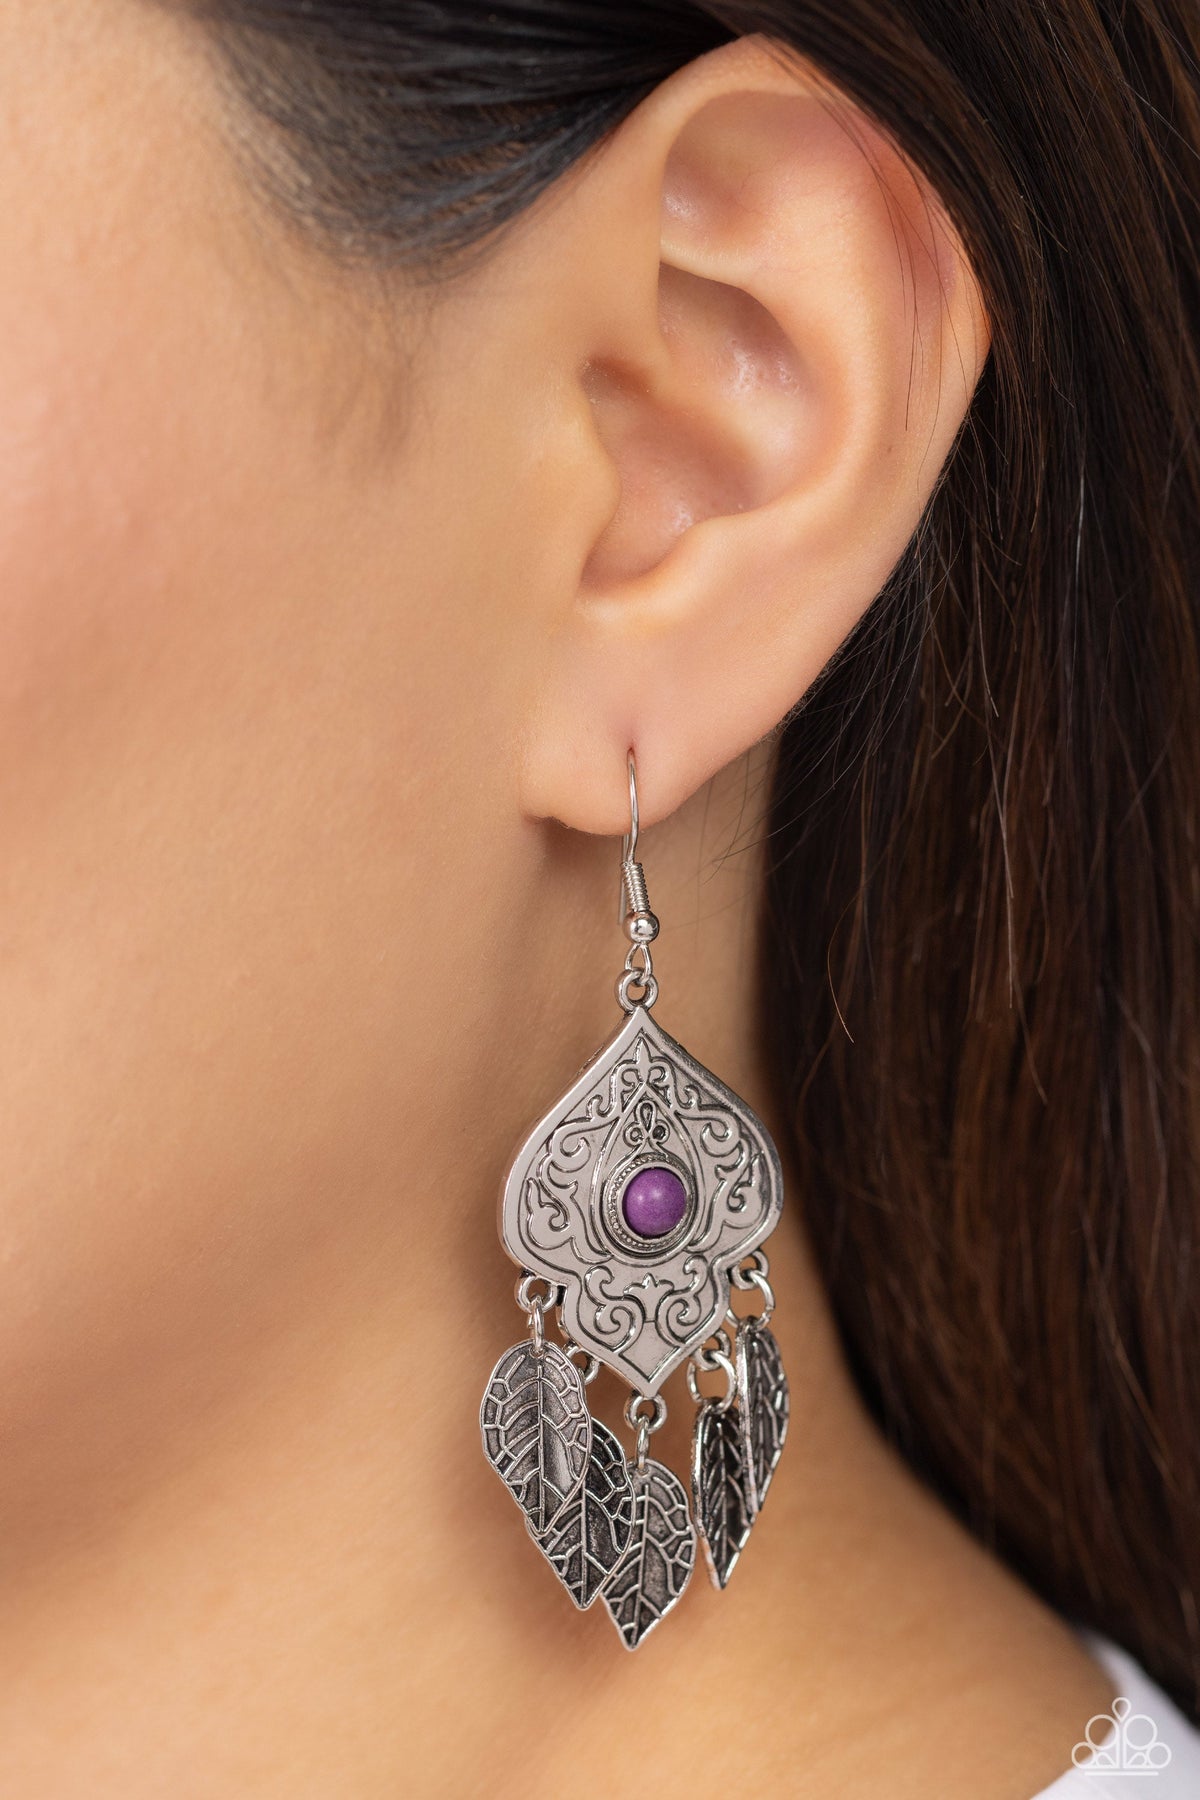 Desert Canopy Purple Earrings - Paparazzi Accessories-on model - CarasShop.com - $5 Jewelry by Cara Jewels